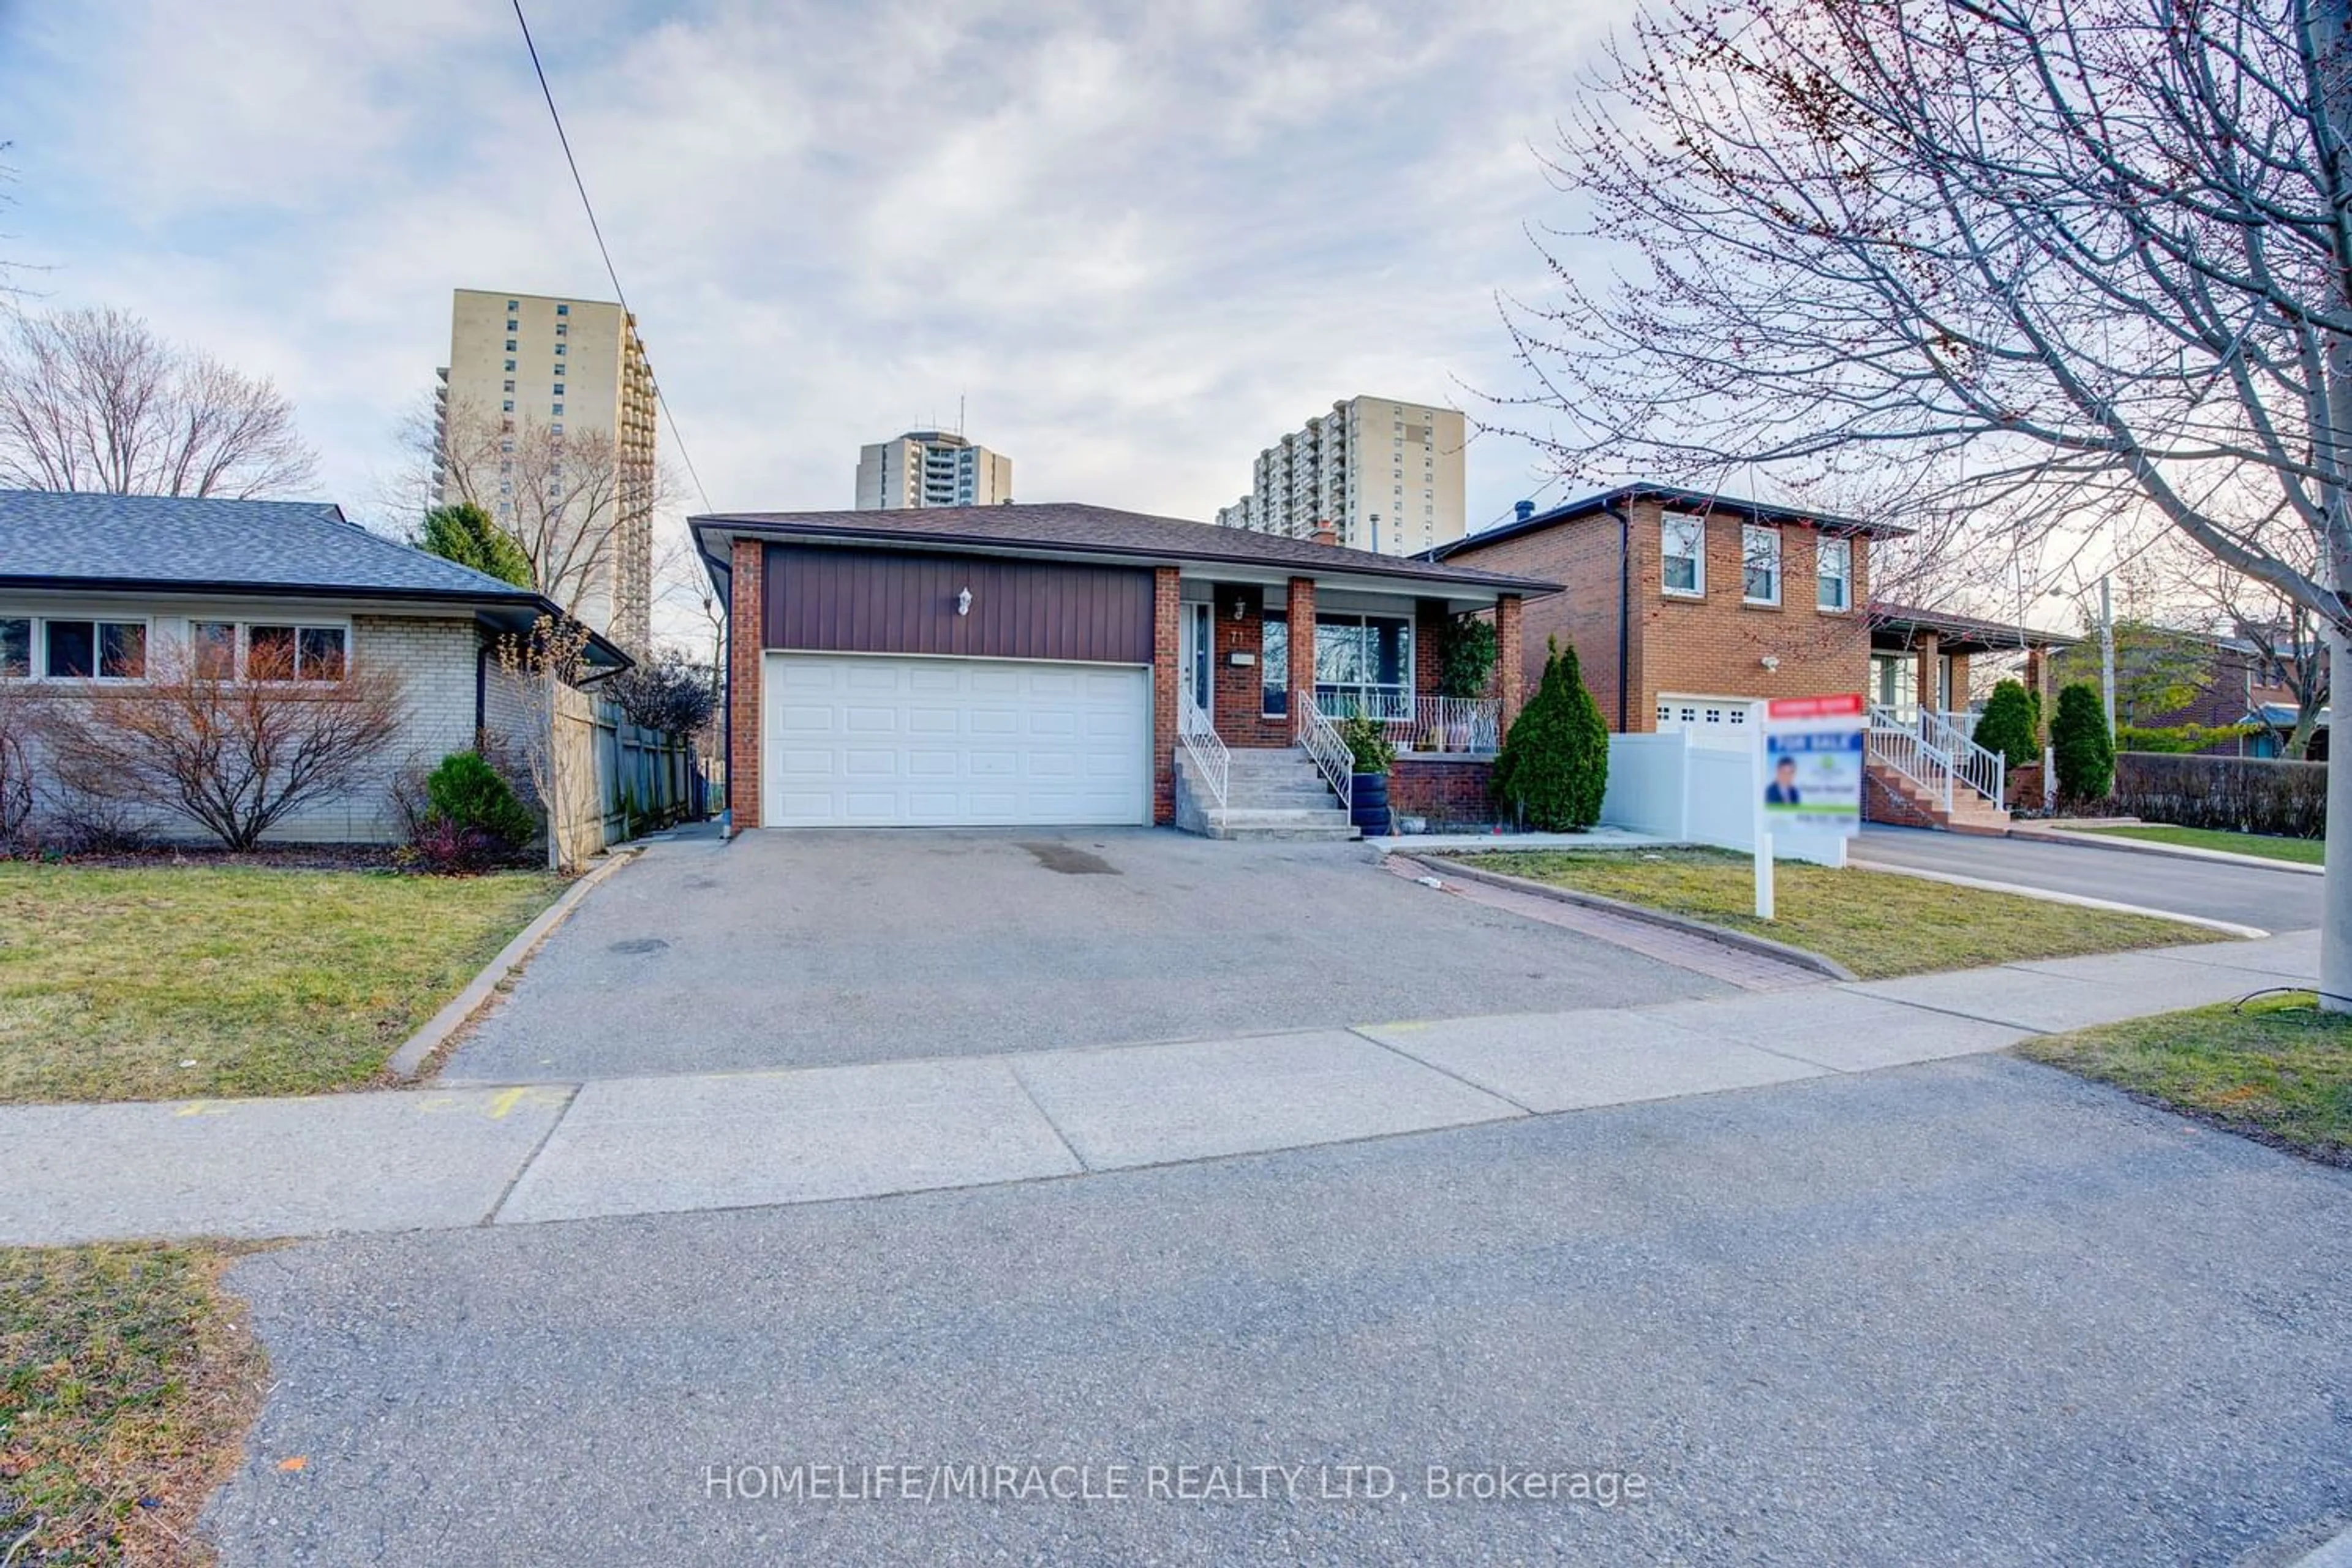 Frontside or backside of a home for 71 Kingsview Blvd, Toronto Ontario M9R 1V1